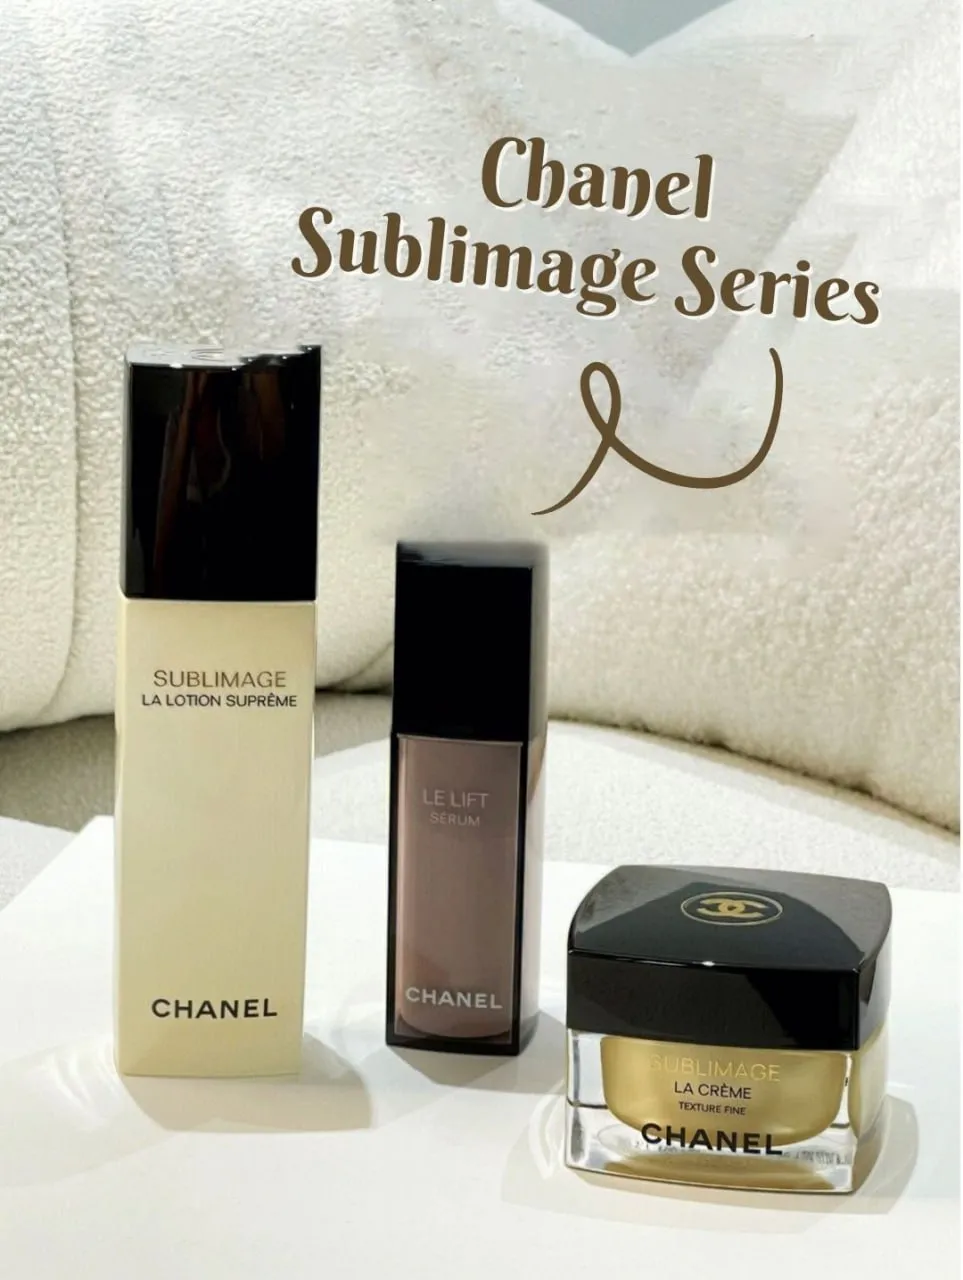 Chanel Sublimage La Creme (Texture Universelle) 50g/1.7oz - Moisturizers &  Treatments, Free Worldwide Shipping